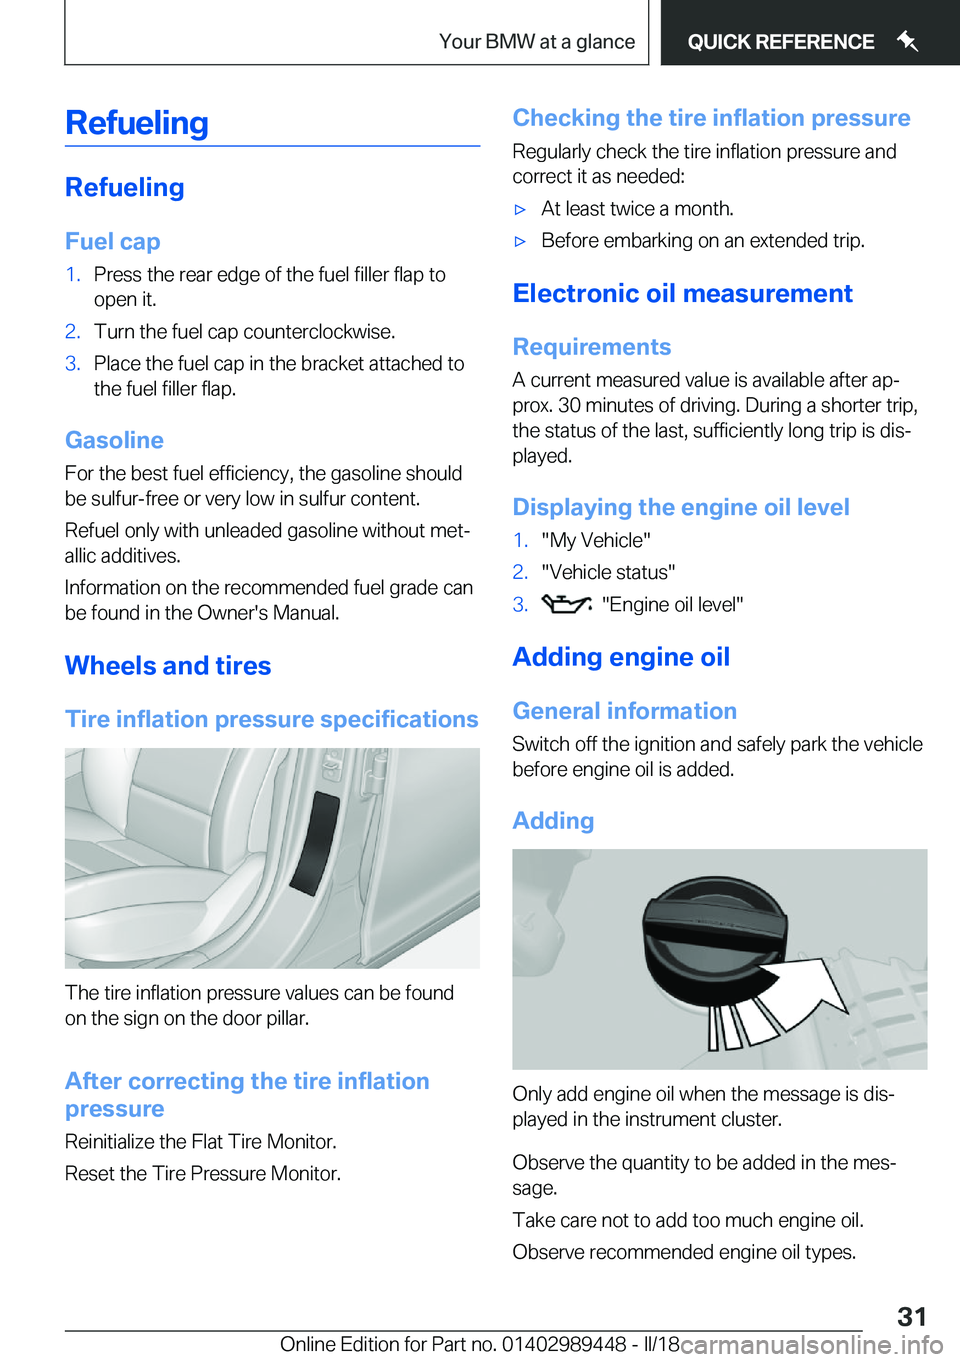 BMW X2 2018 Owners Guide �R�e�f�u�e�l�i�n�g
�R�e�f�u�e�l�i�n�g�F�u�e�l��c�a�p
�1�.�P�r�e�s�s� �t�h�e� �r�e�a�r� �e�d�g�e� �o�f� �t�h�e� �f�u�e�l� �f�i�l�l�e�r� �f�l�a�p� �t�o�o�p�e�n� �i�t�.�2�.�T�u�r�n� �t�h�e� �f�u�e�l� �c